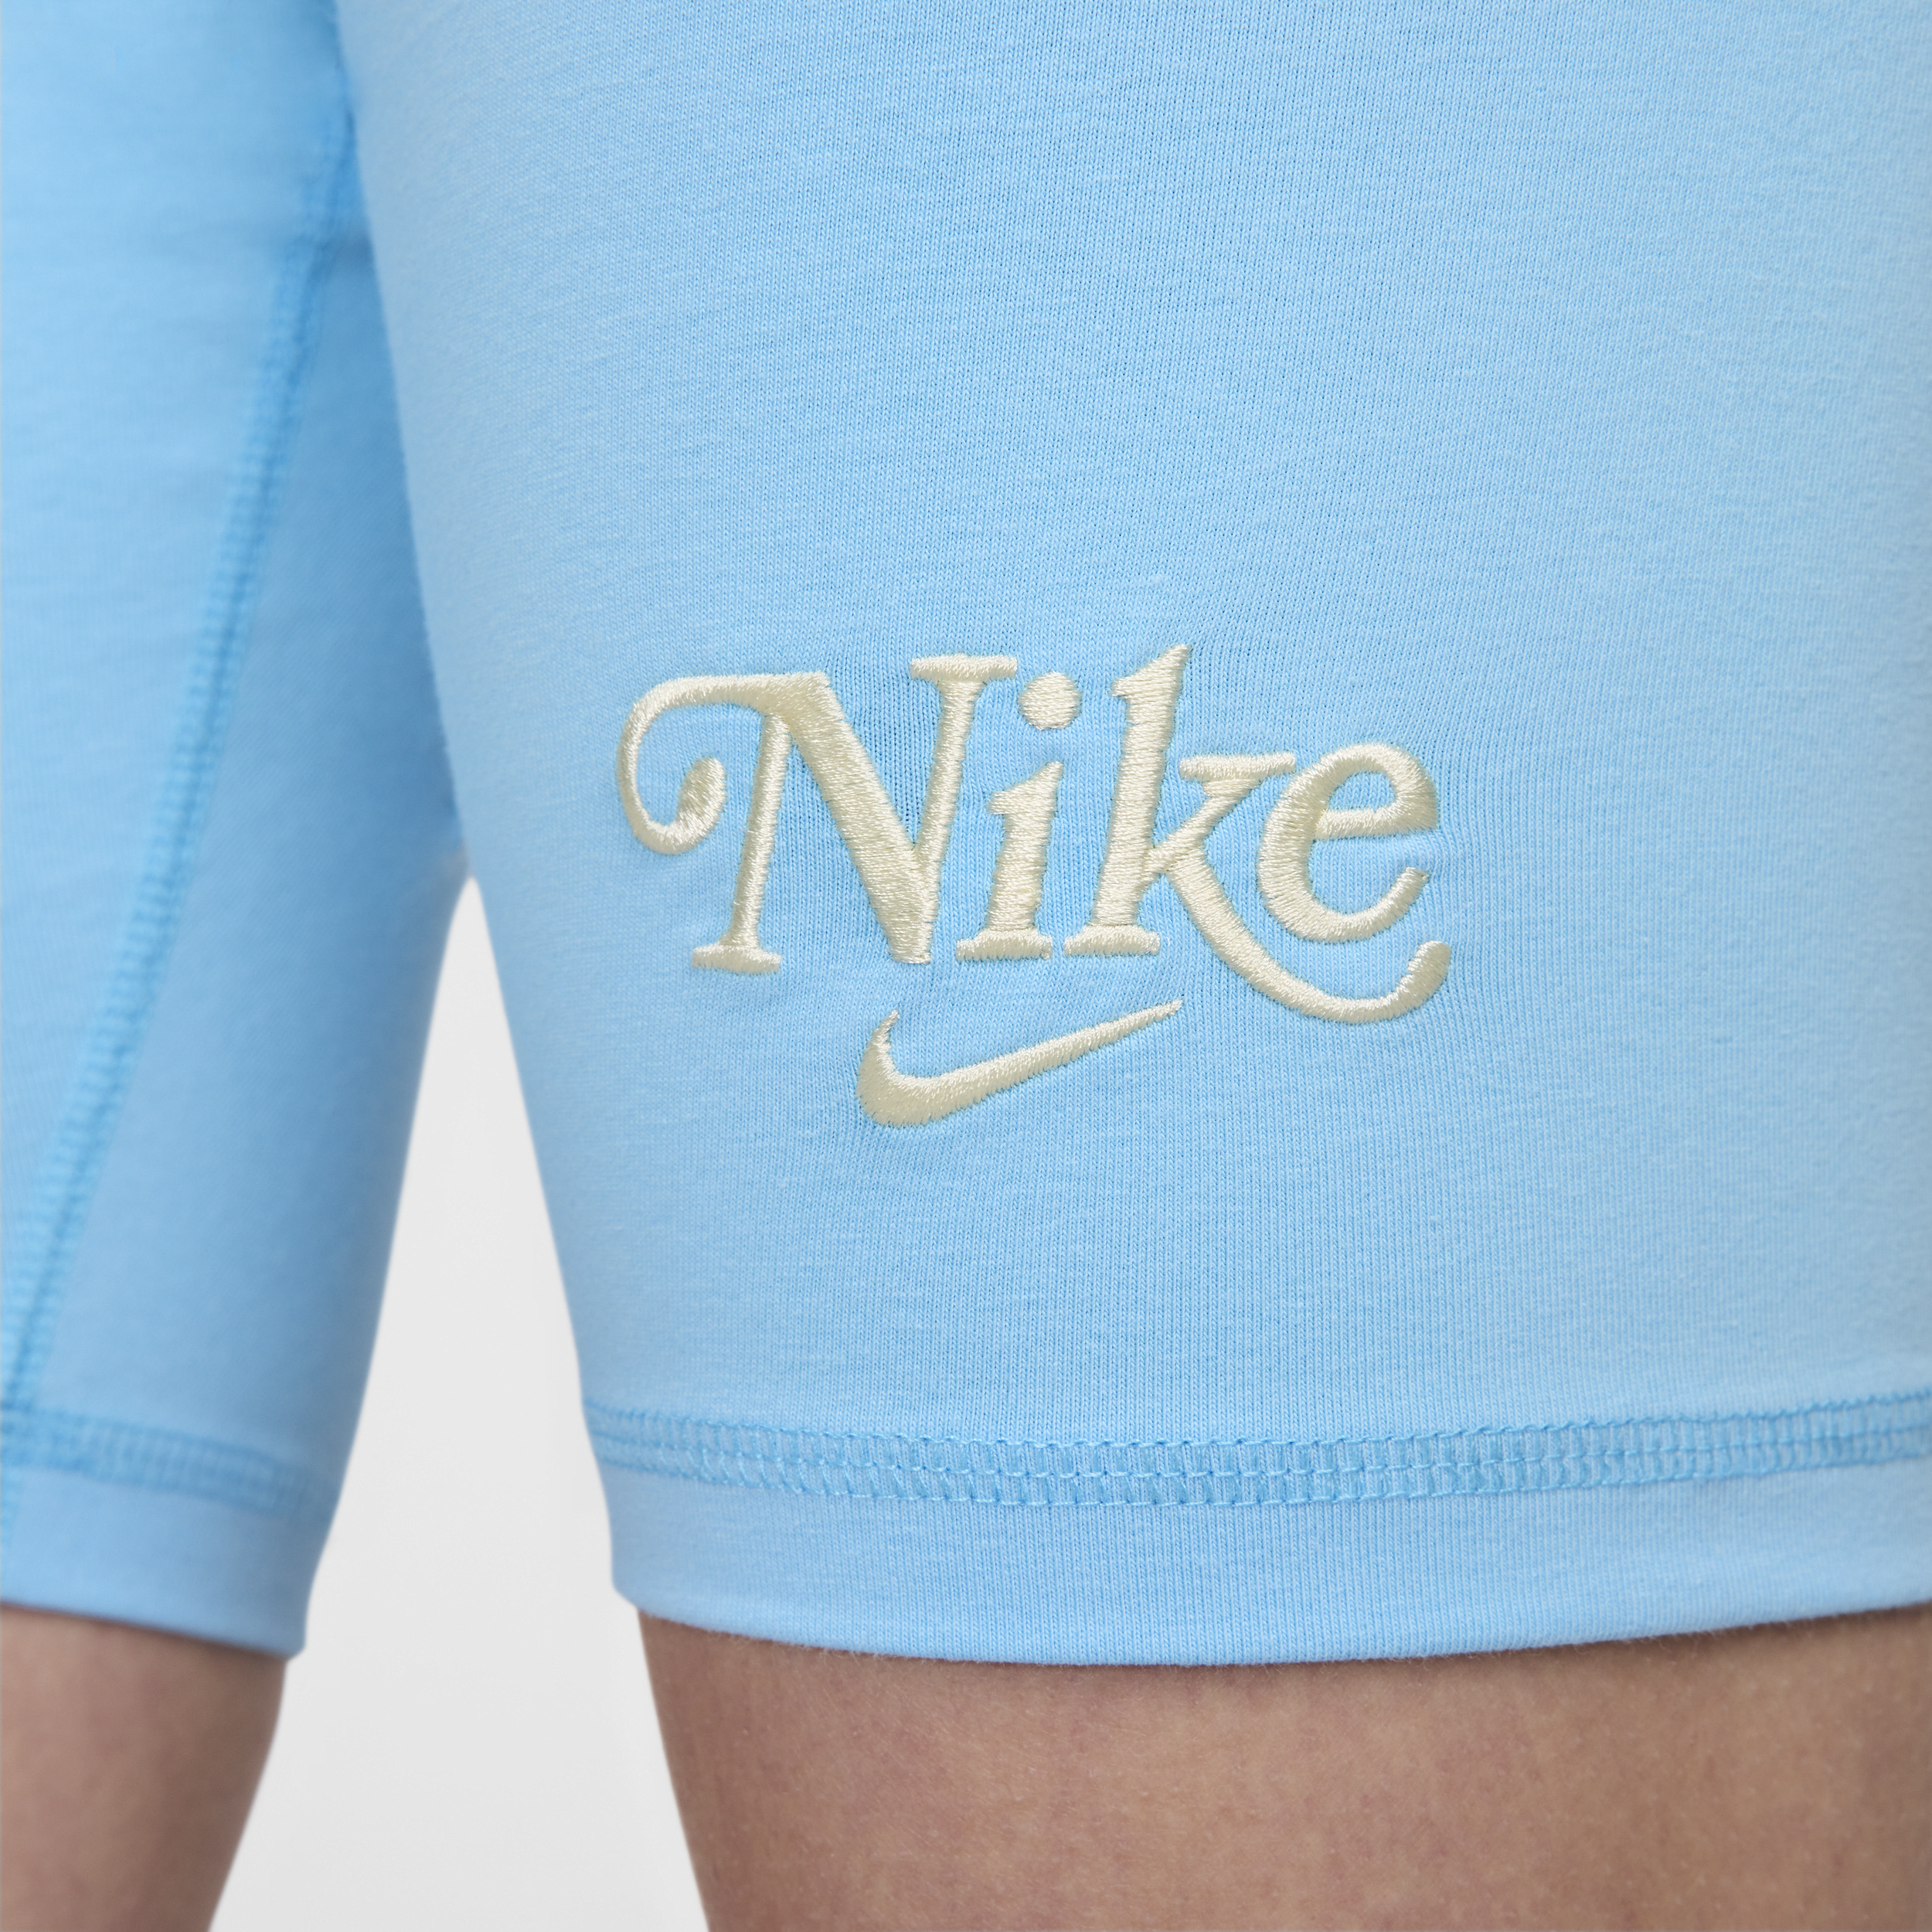 Nike Sportswear bikeshorts voor dames Blauw